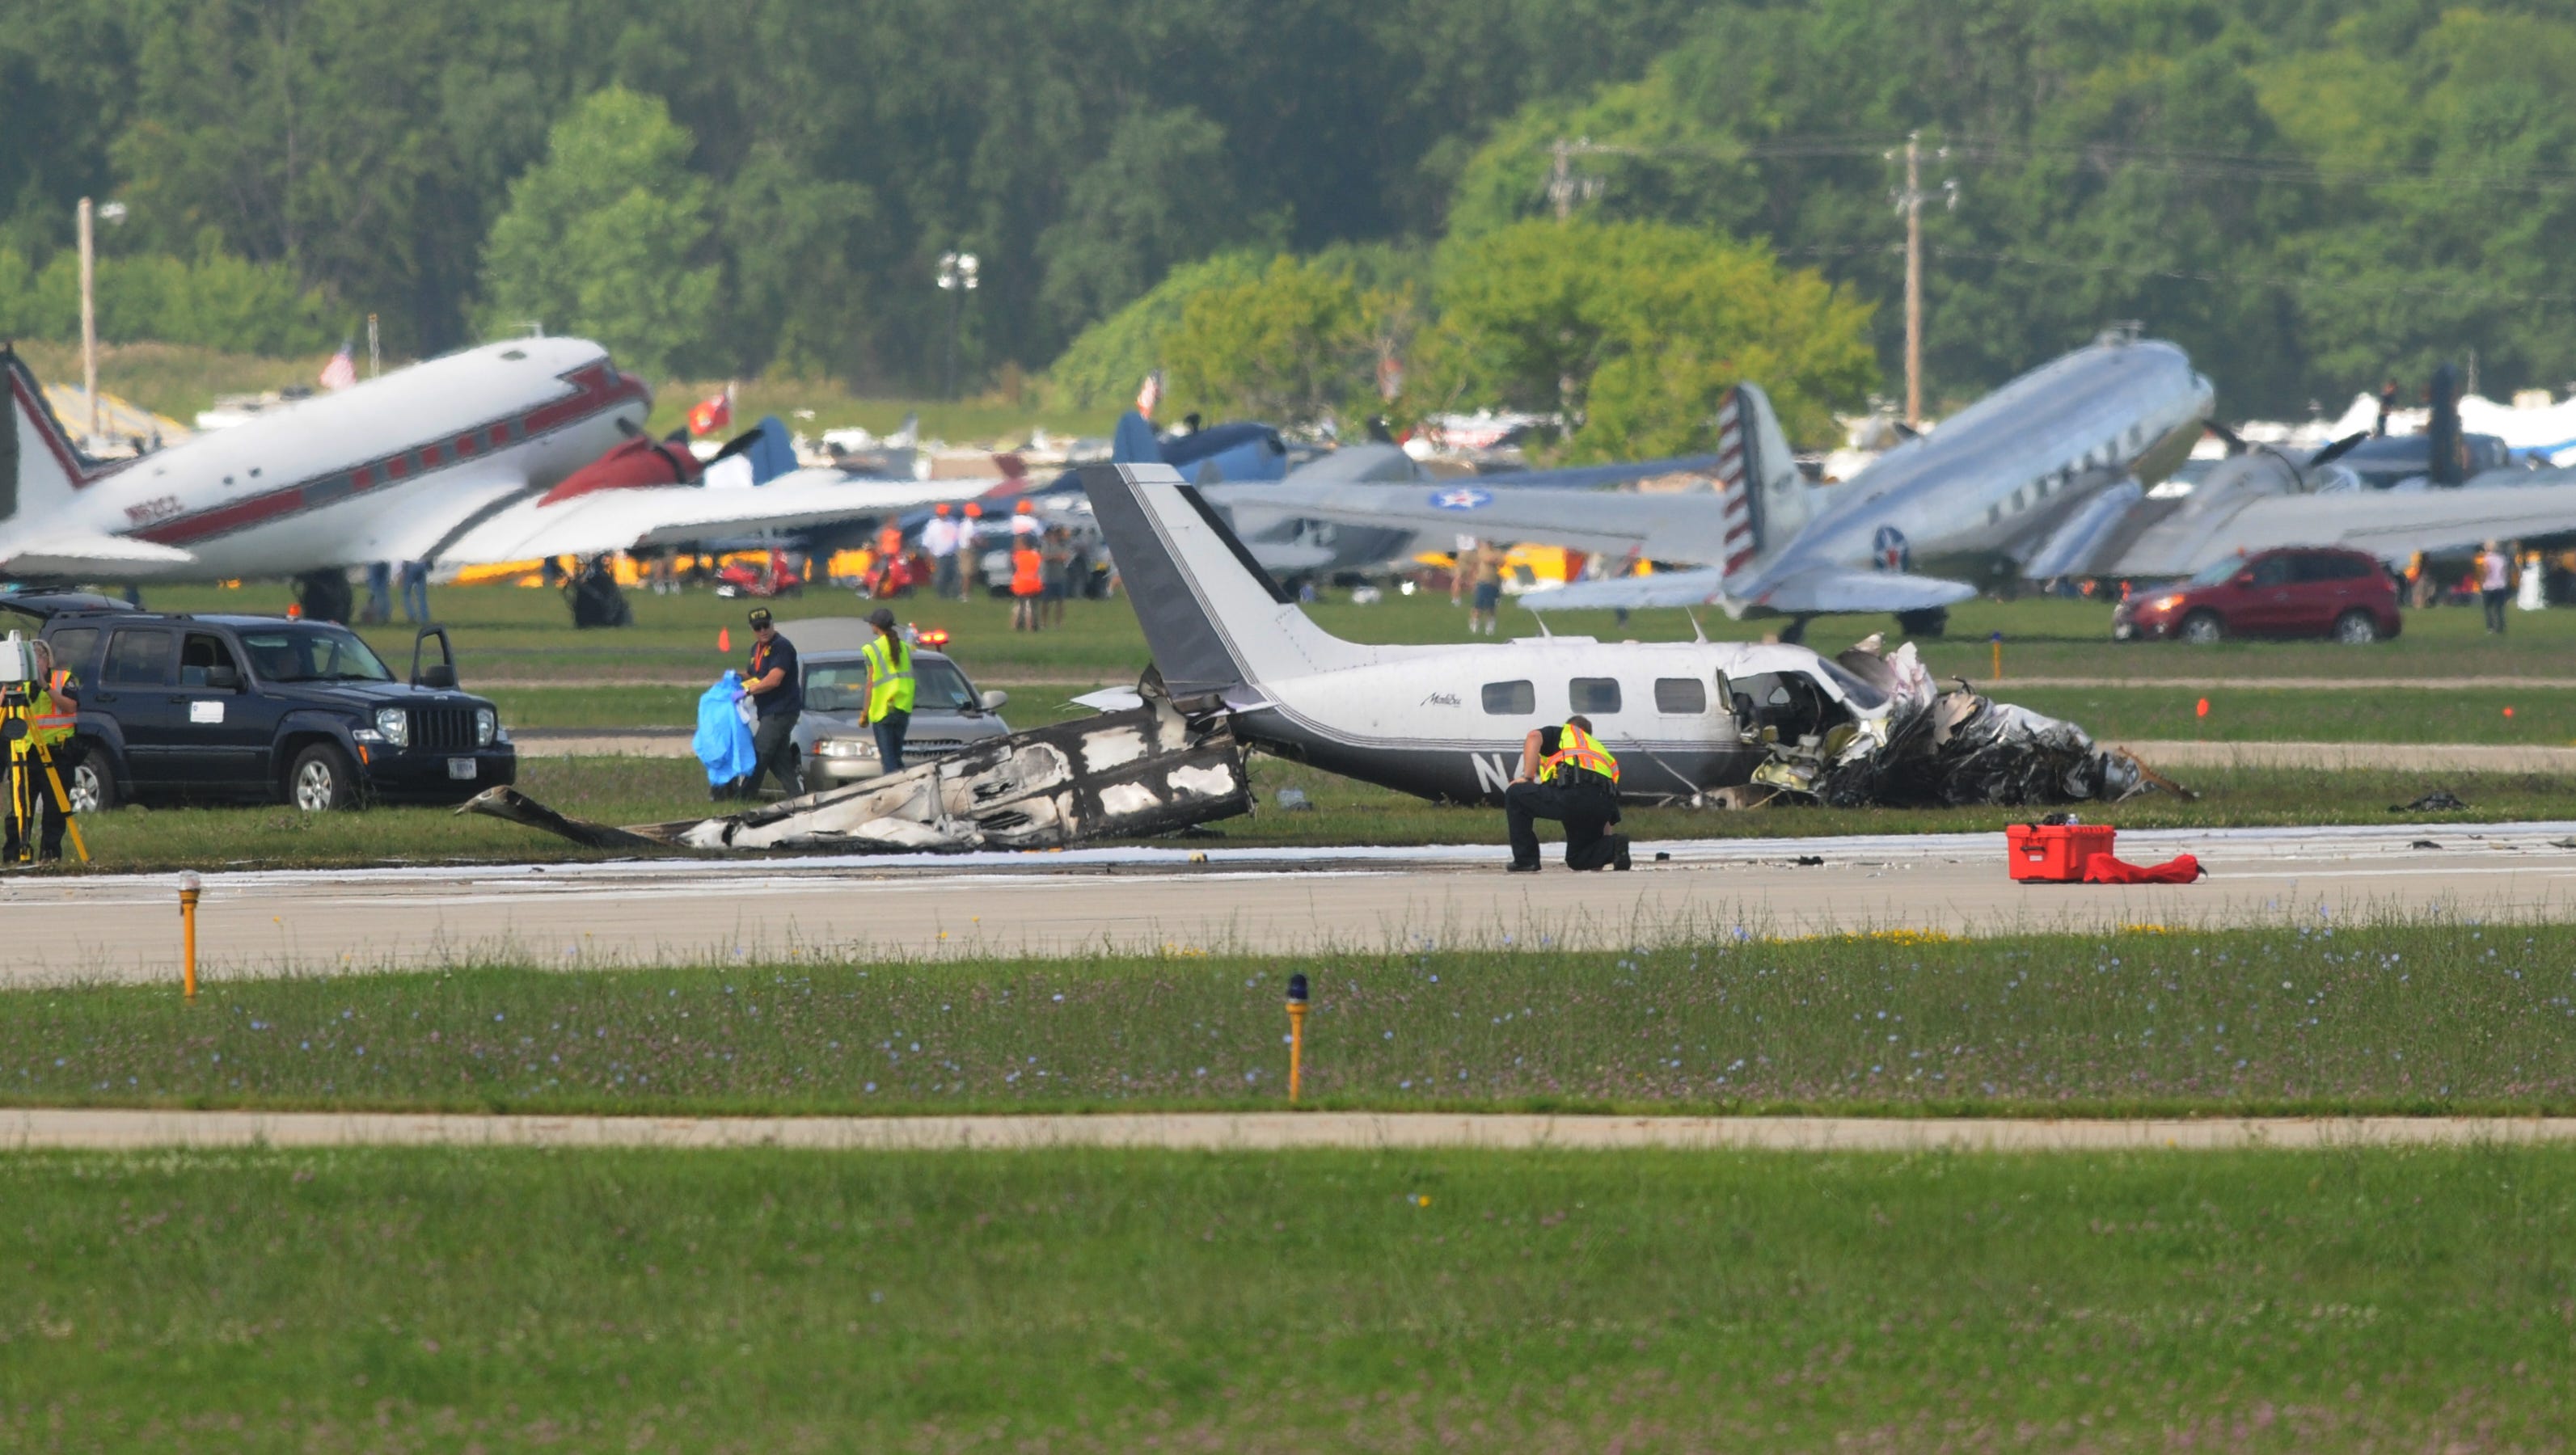 Plane crashes at EAA; passengers injured